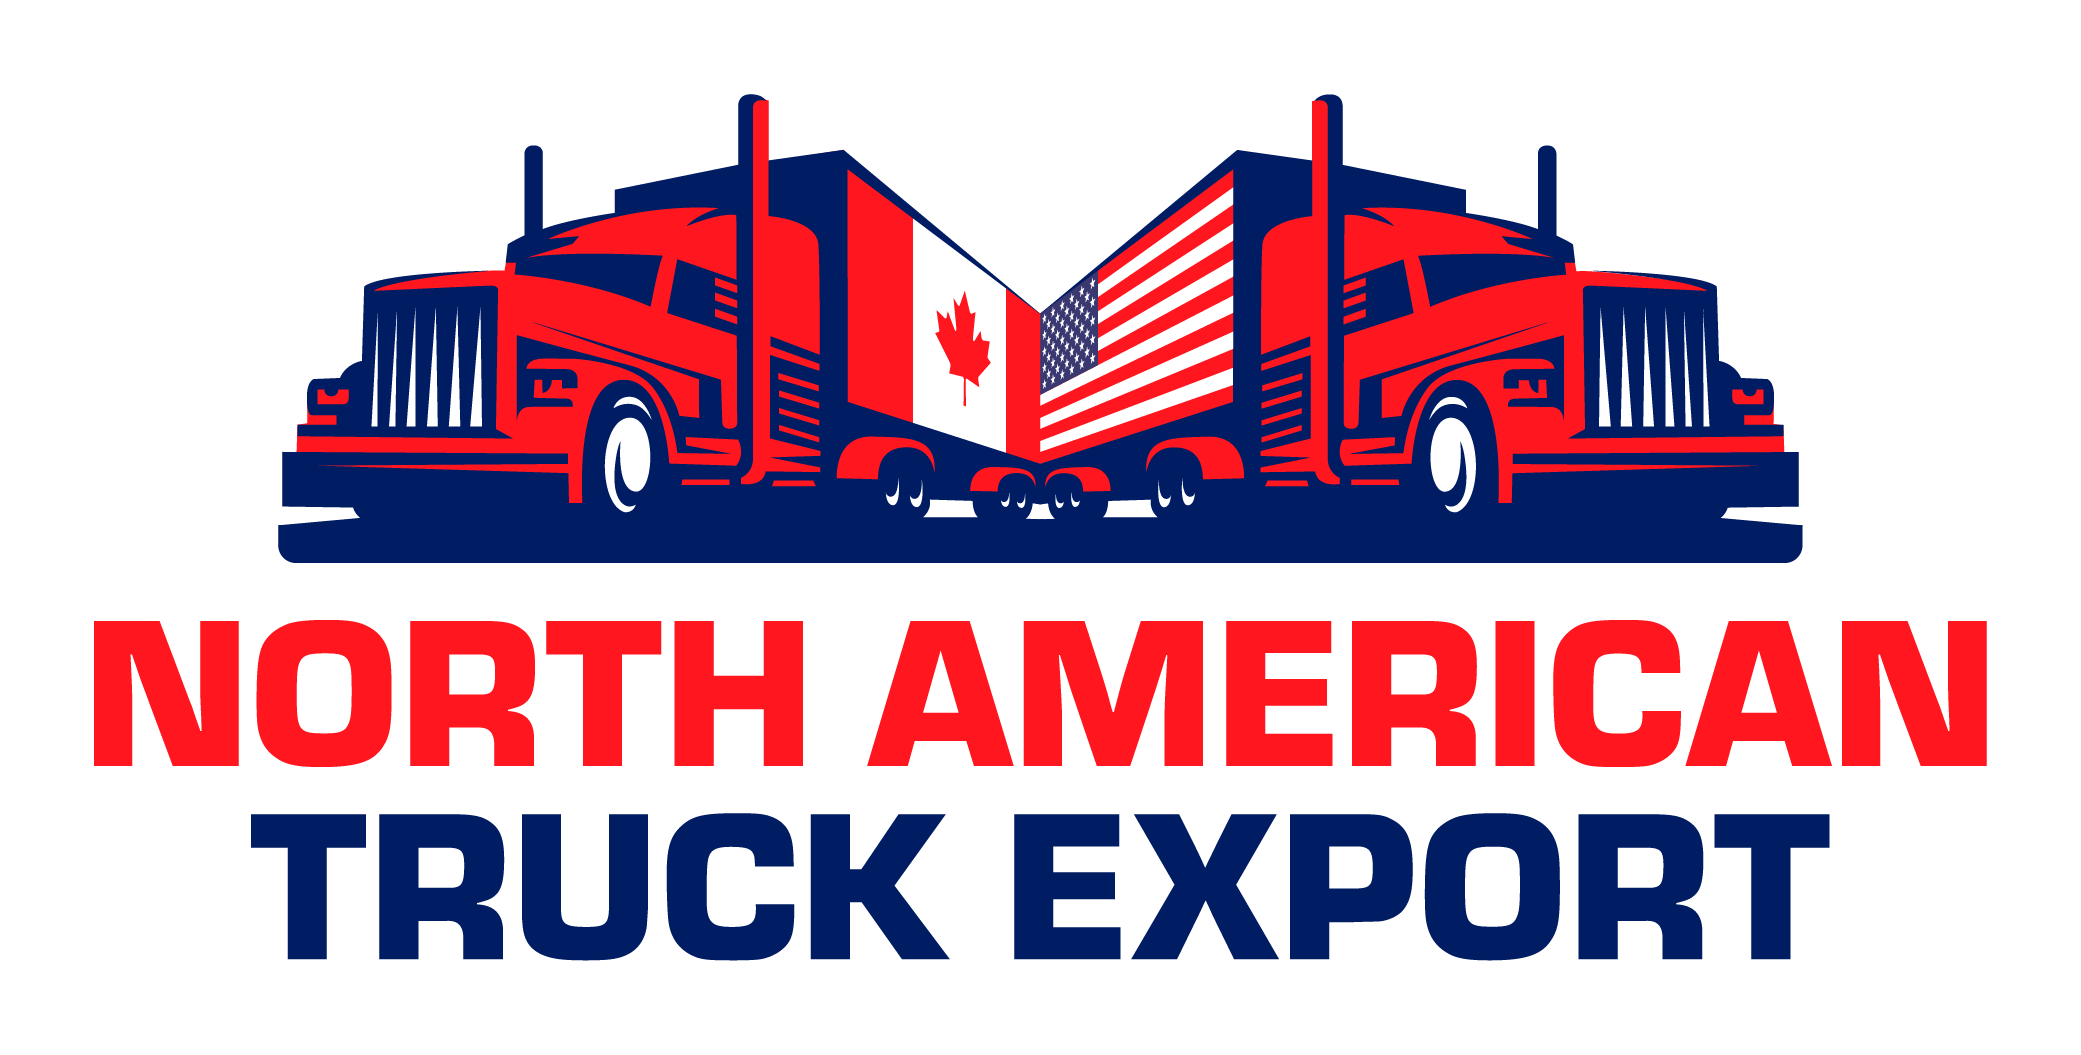 North American Truck Export